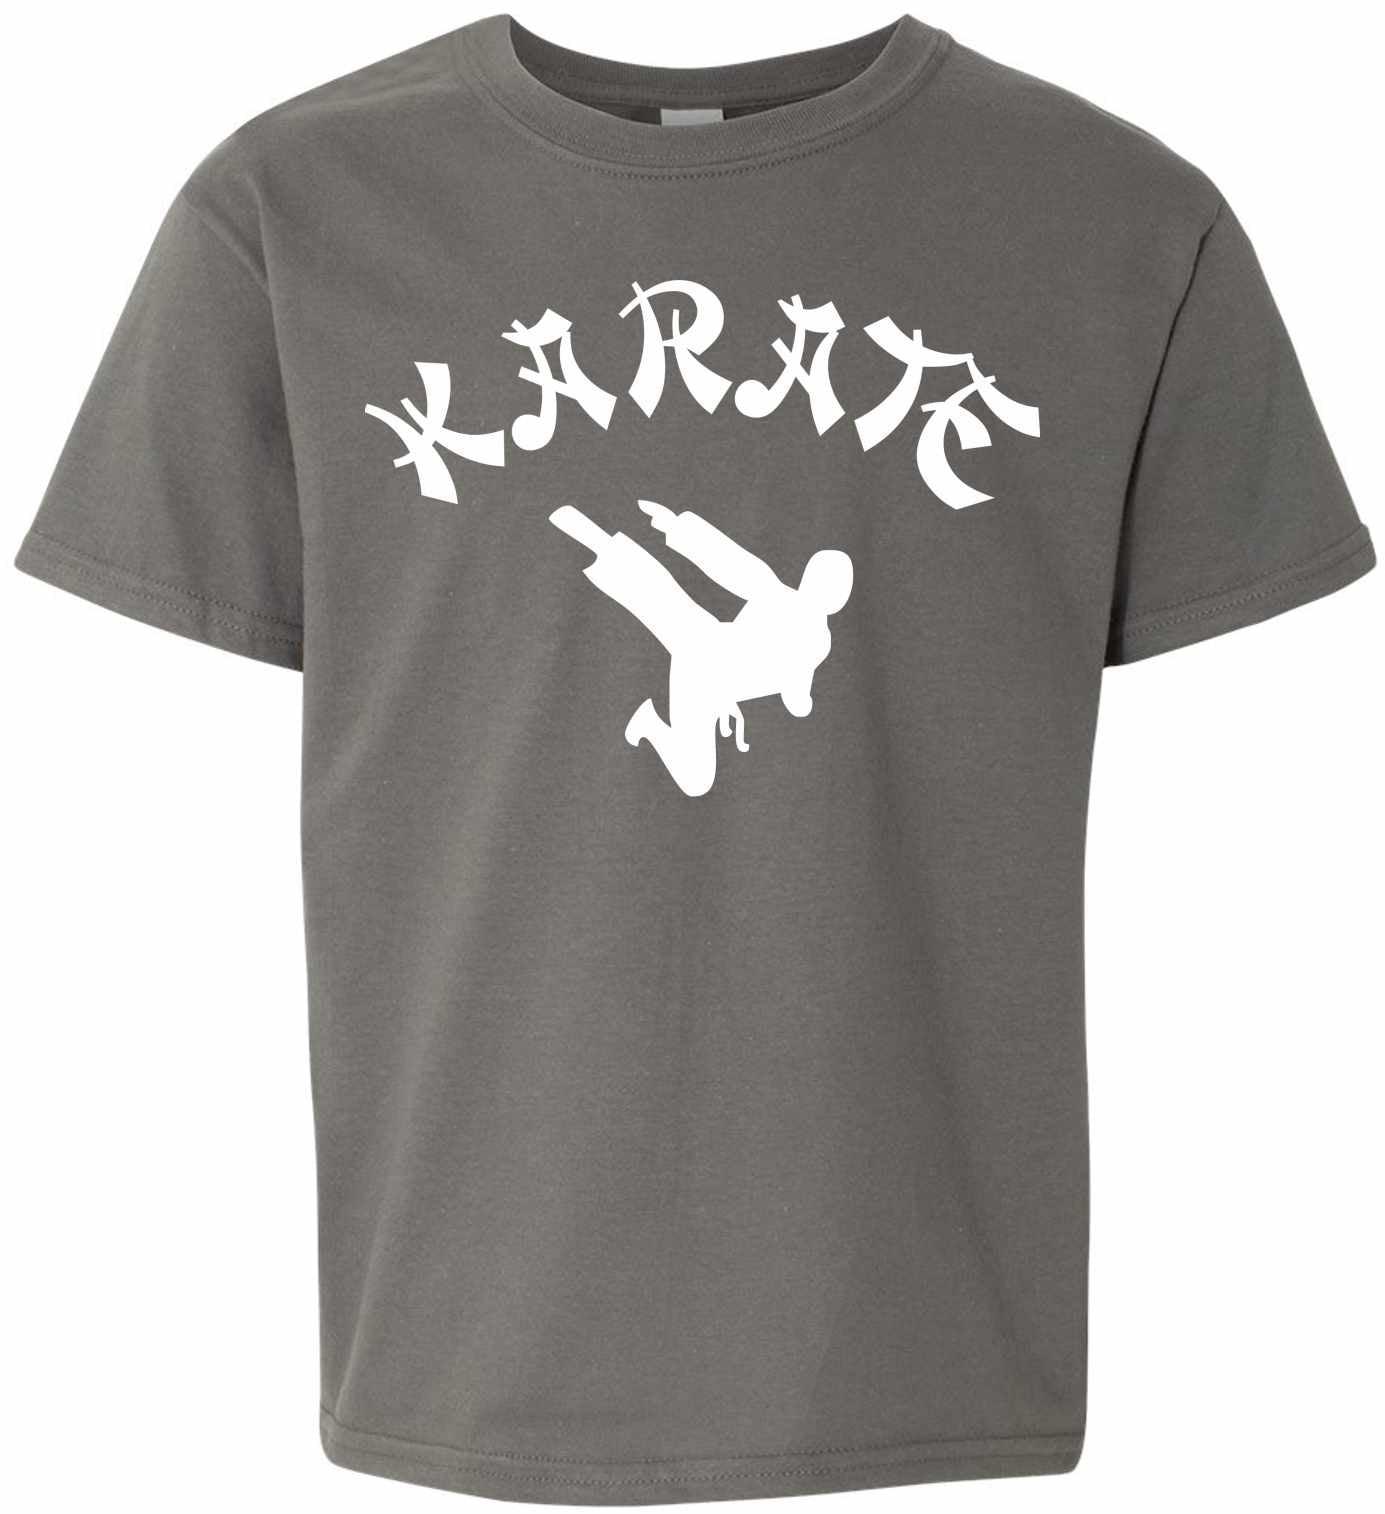 KARATE on Kids T-Shirt (#744-201)